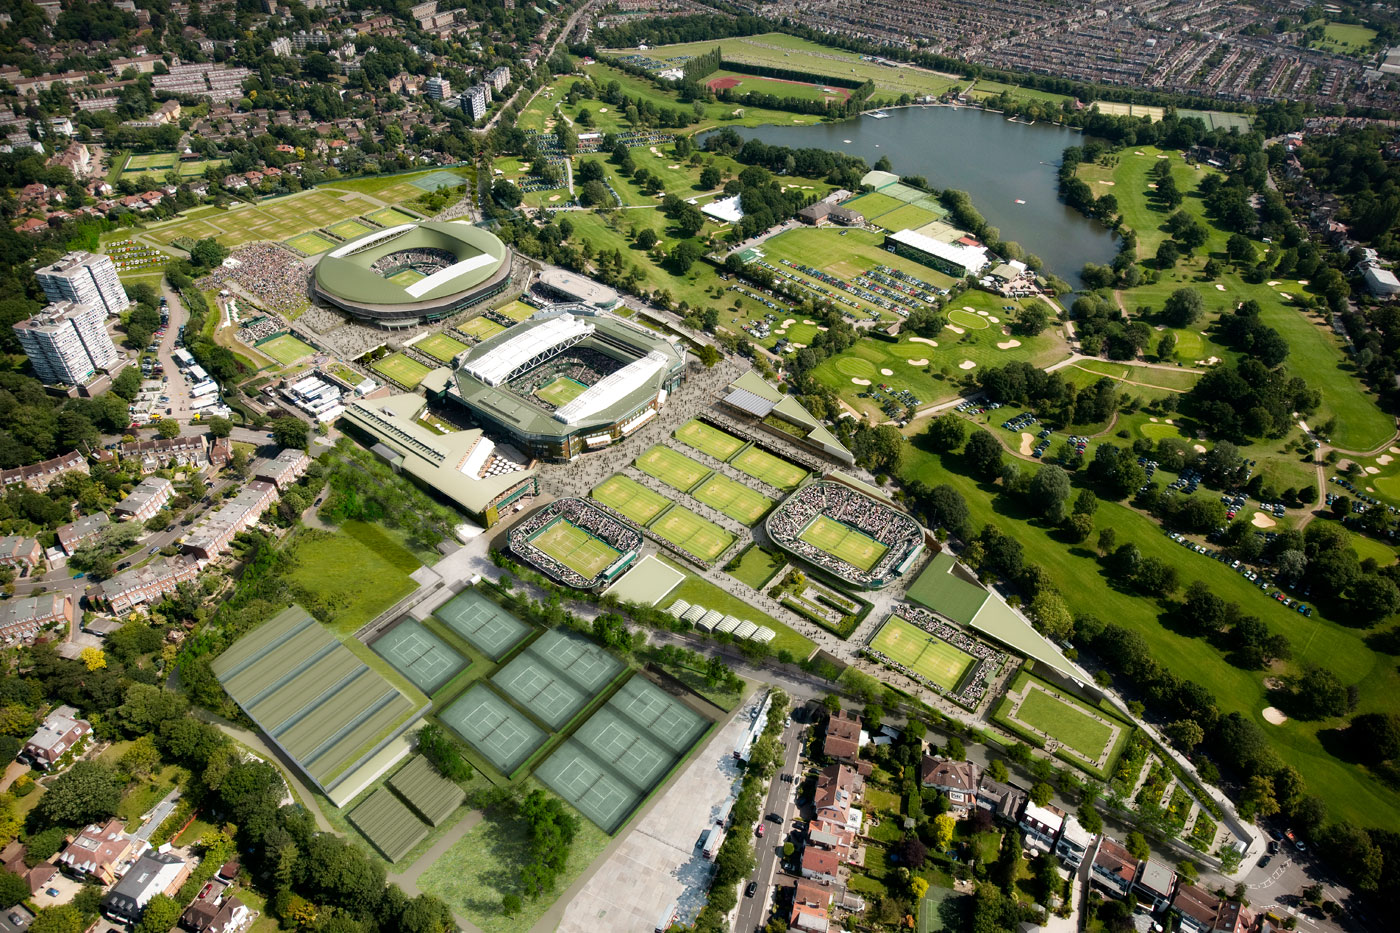 The Wimbledon Master Plan The Championships, Wimbledon Official